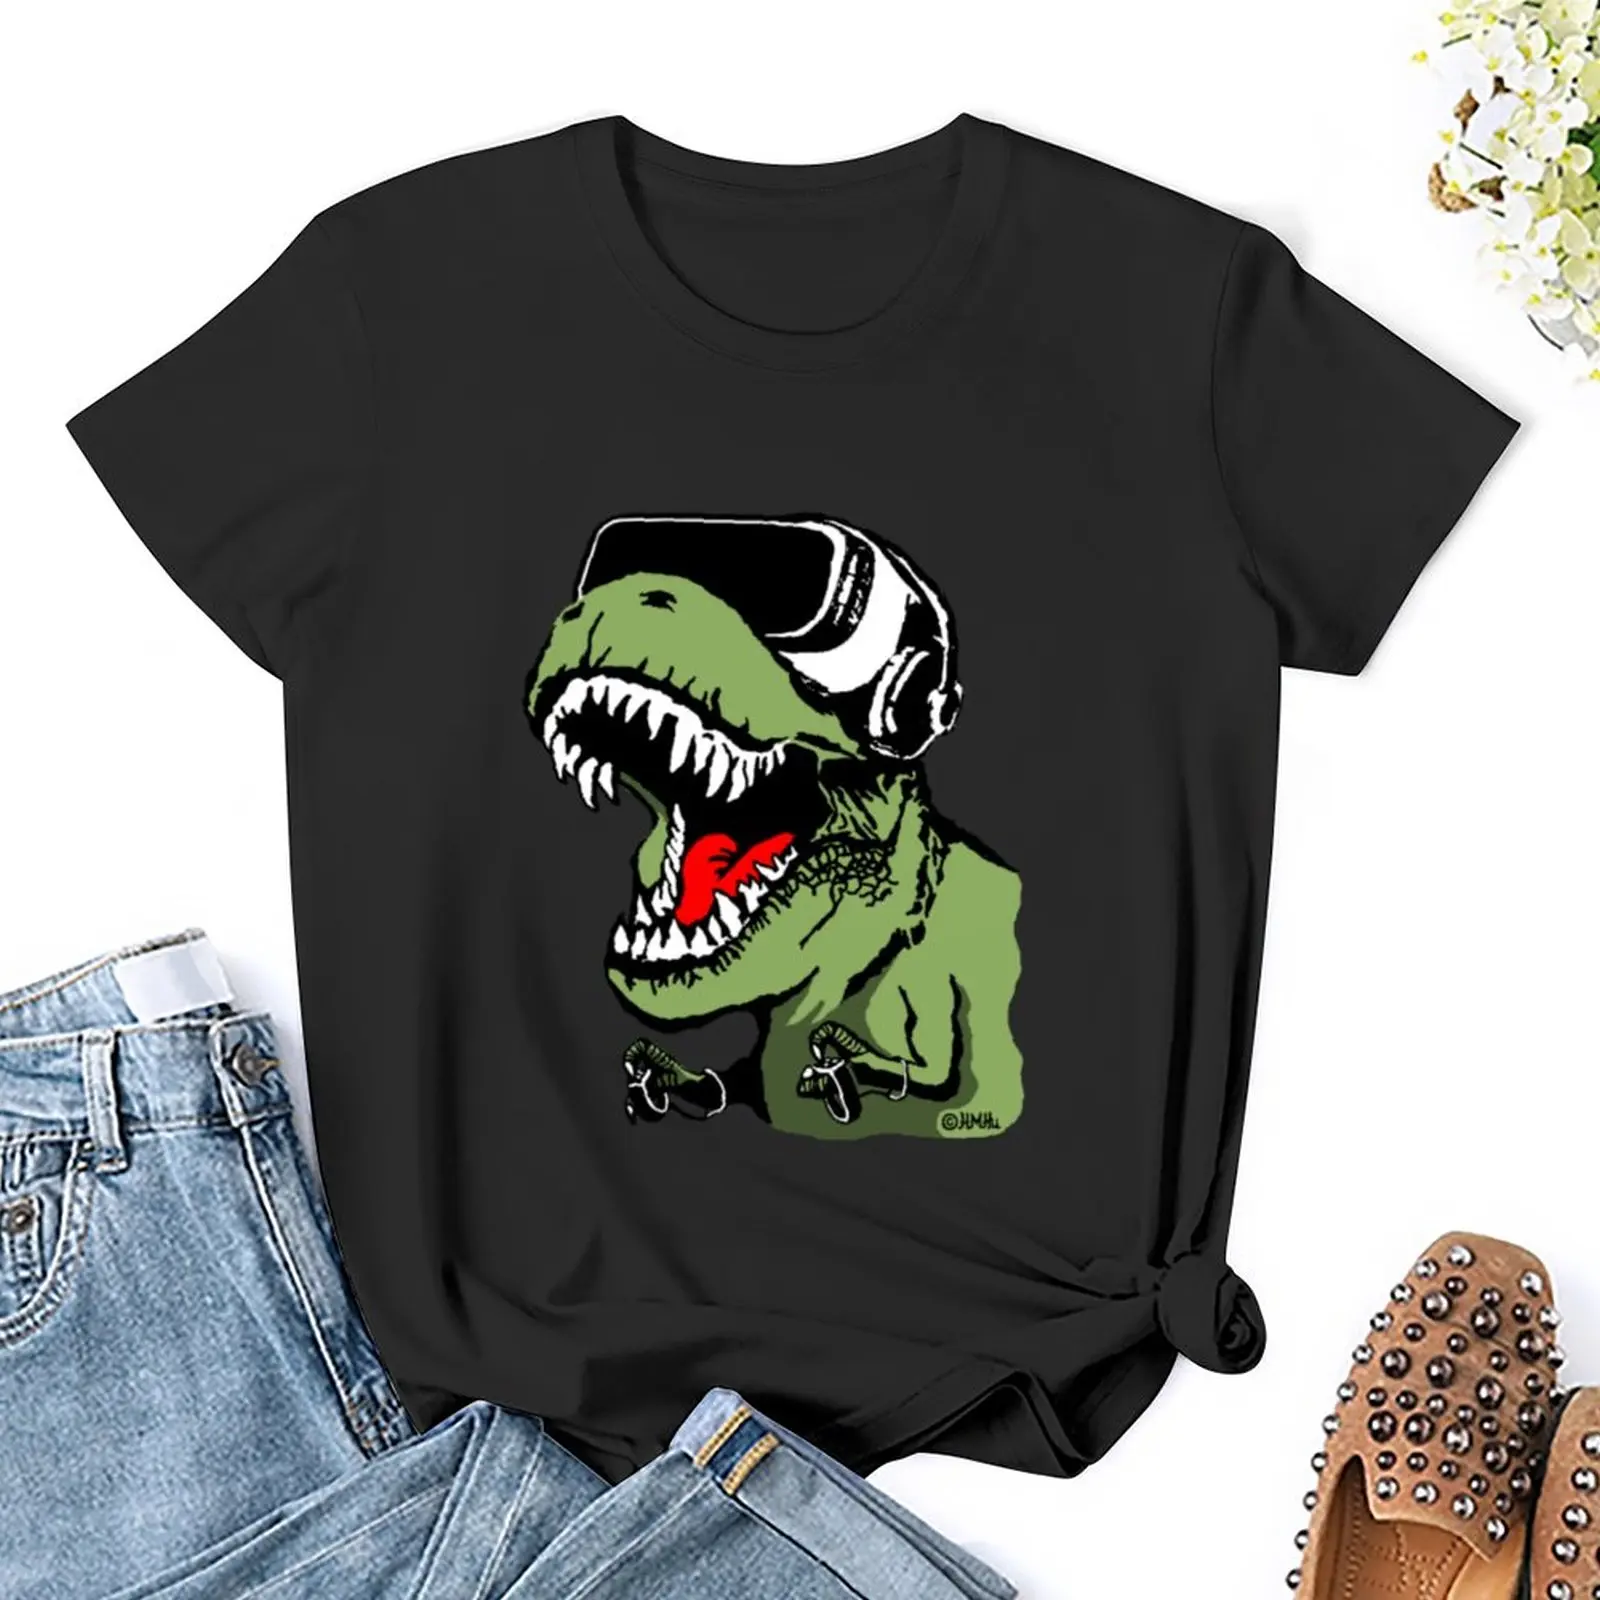 VR T-rex T-Shirt tops funny t-shirt vestuário de Mulher